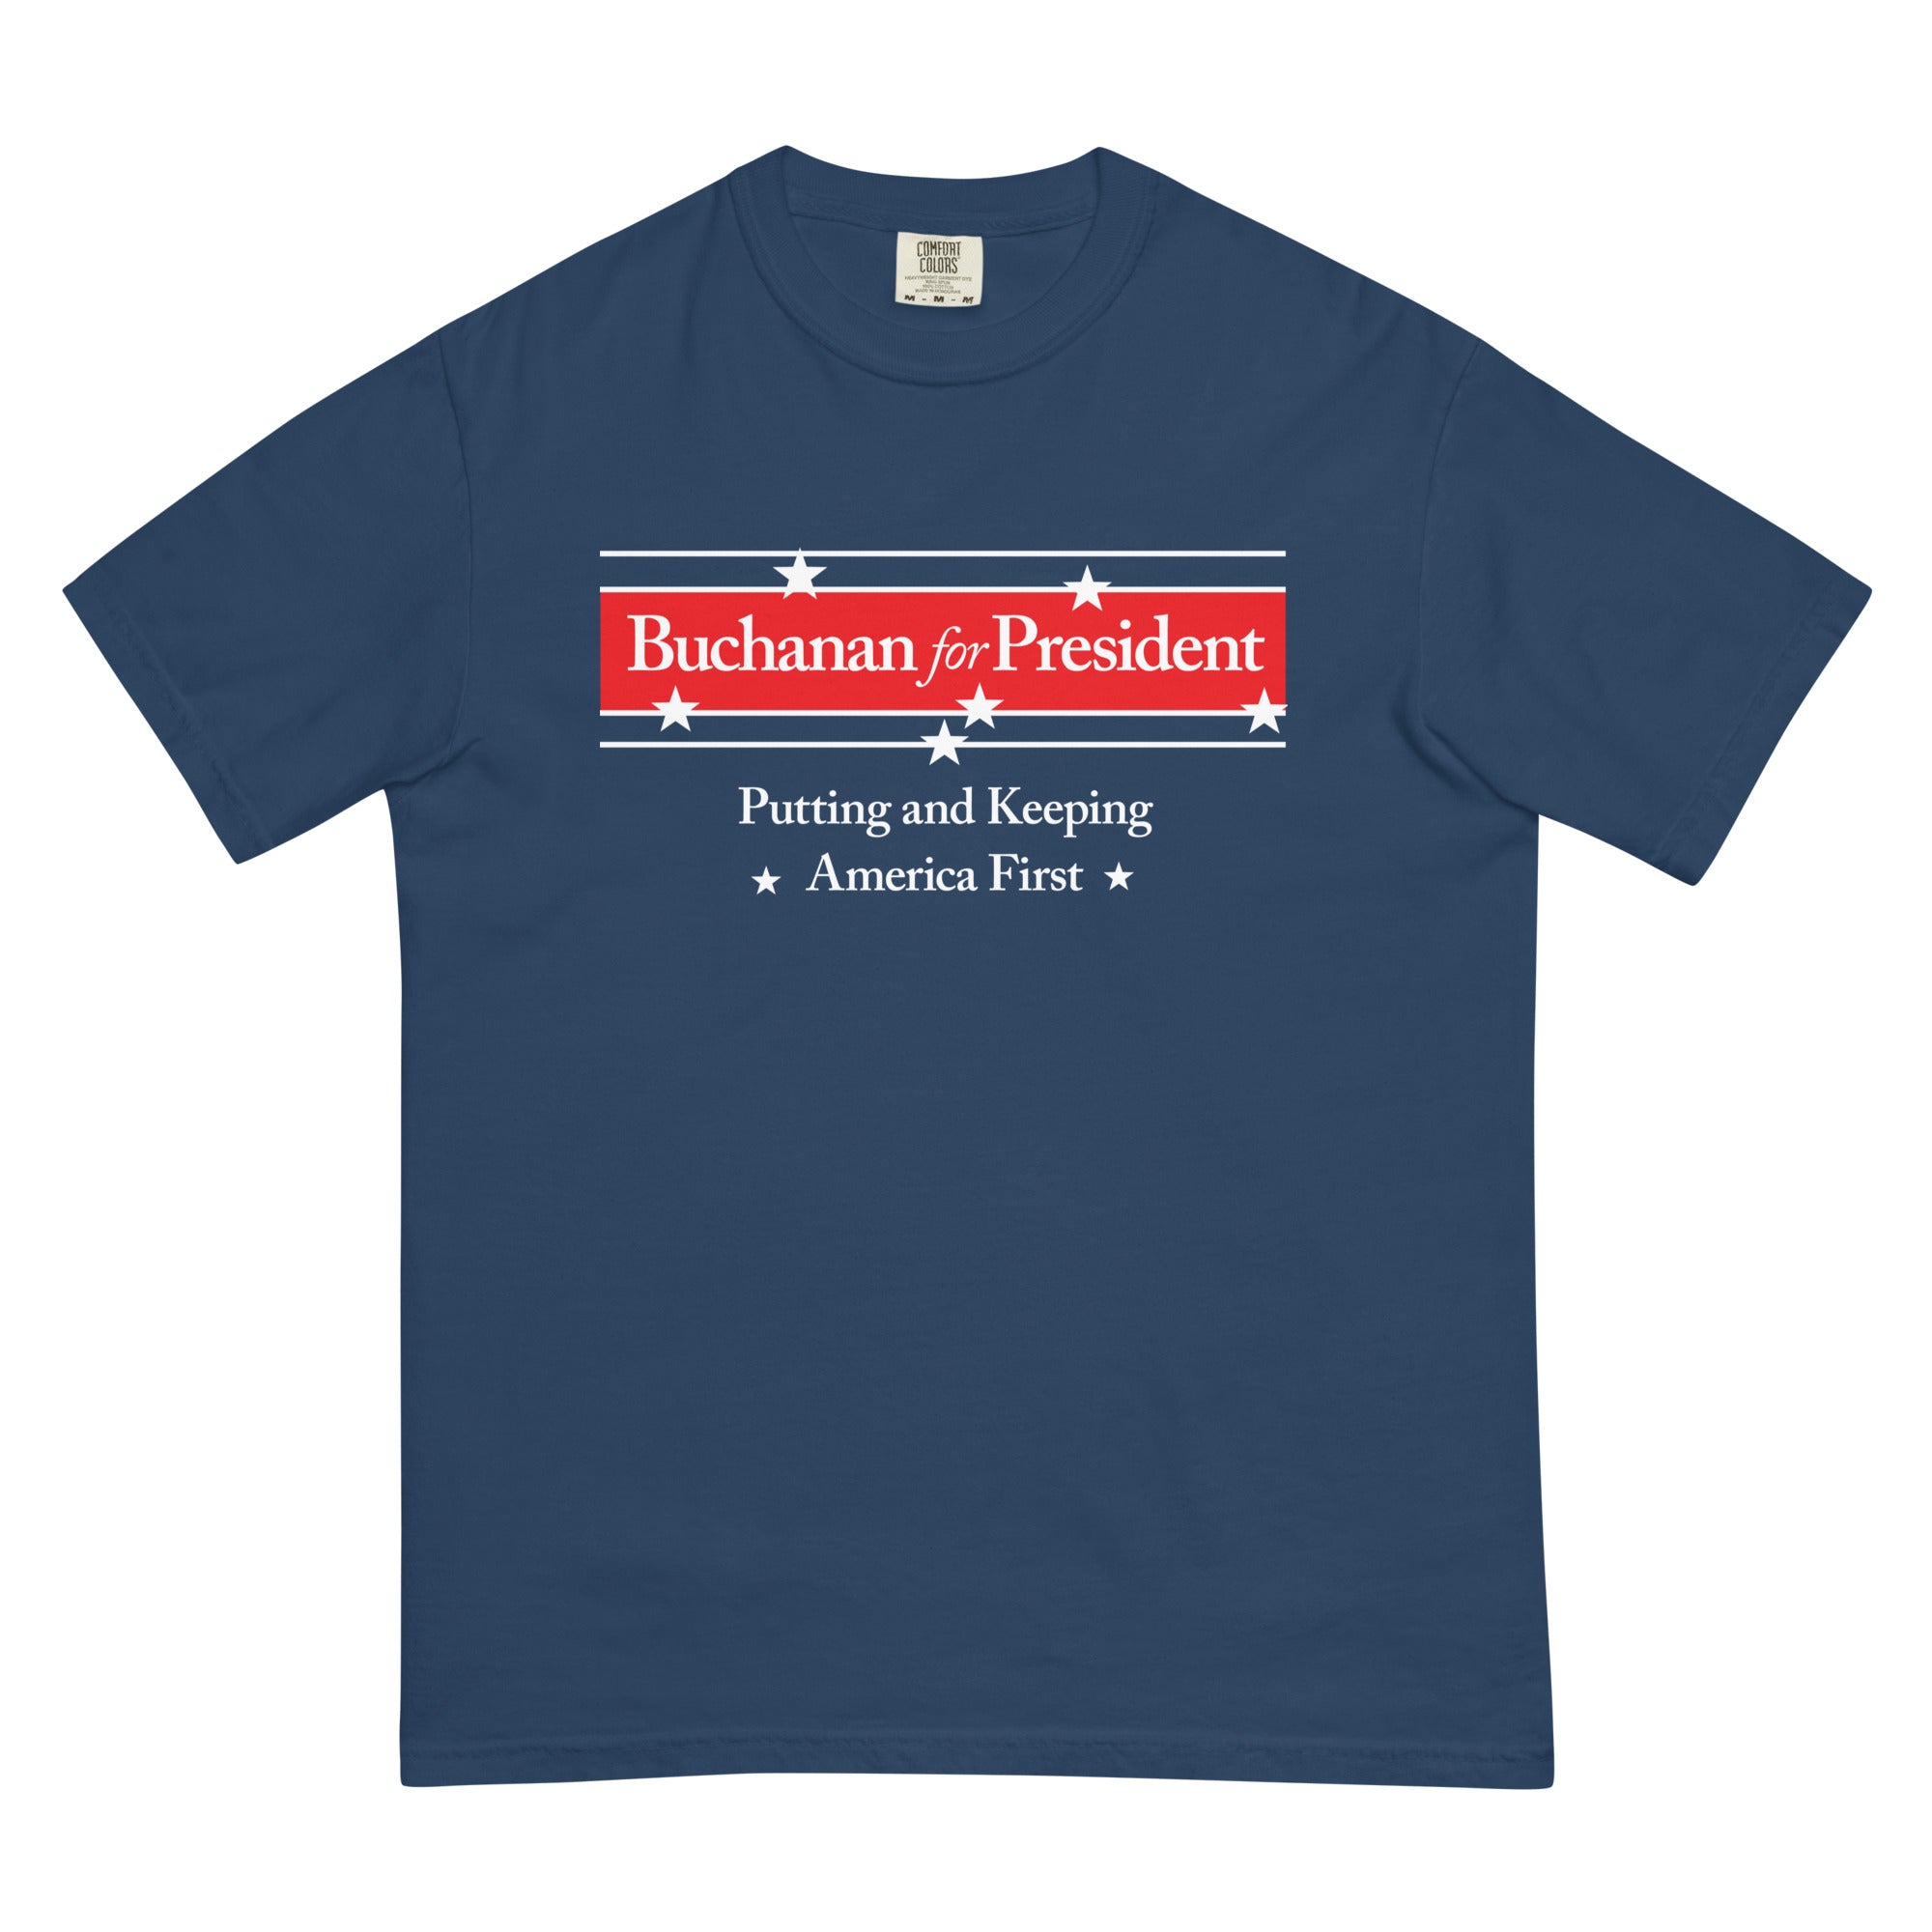 Pat Buchanan 1992 Presidential Campaign Reproduction Garment-dyed T-Shirt